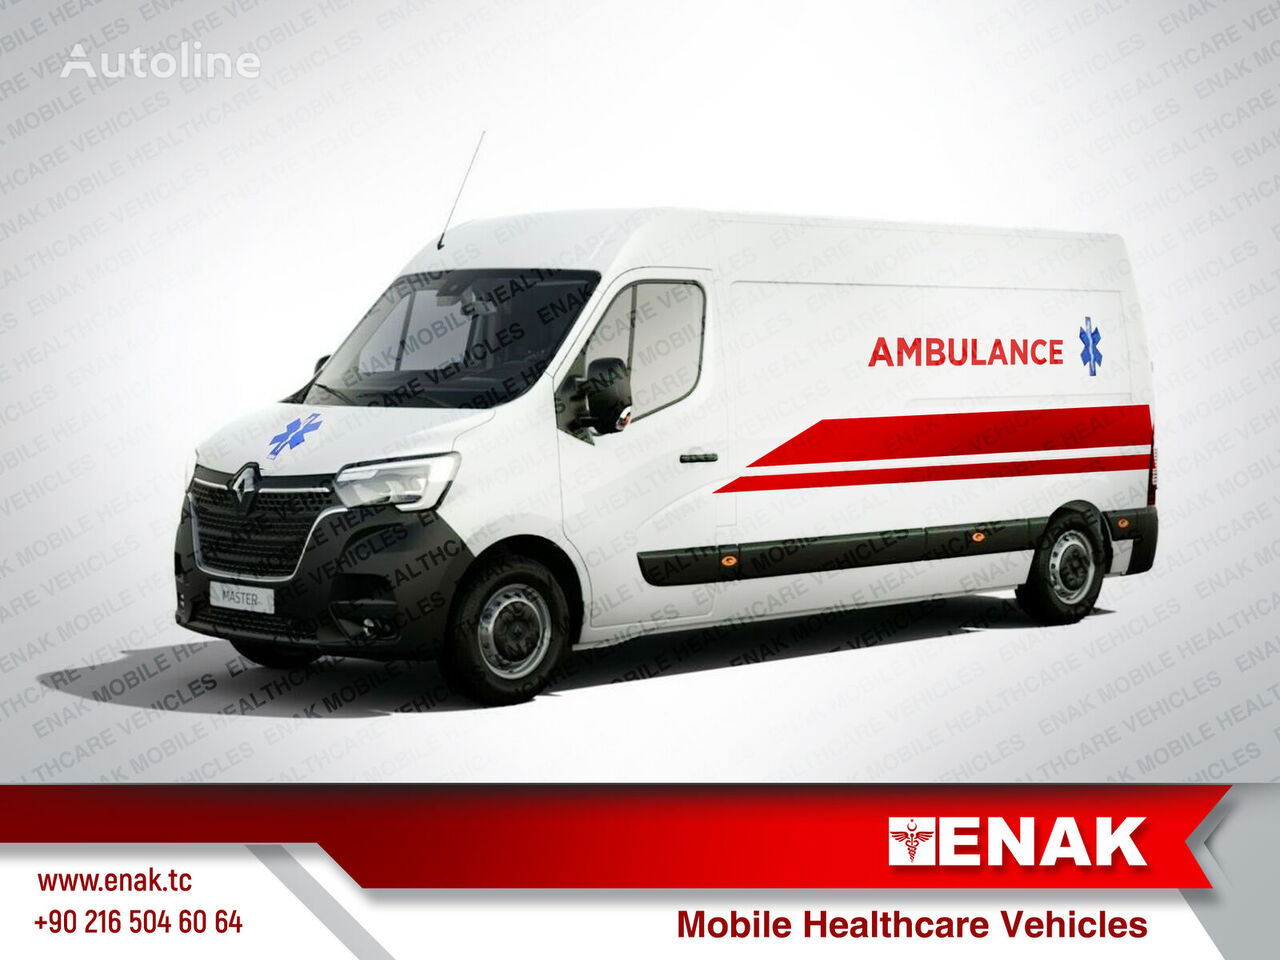 new Renault MASTER  ambulance